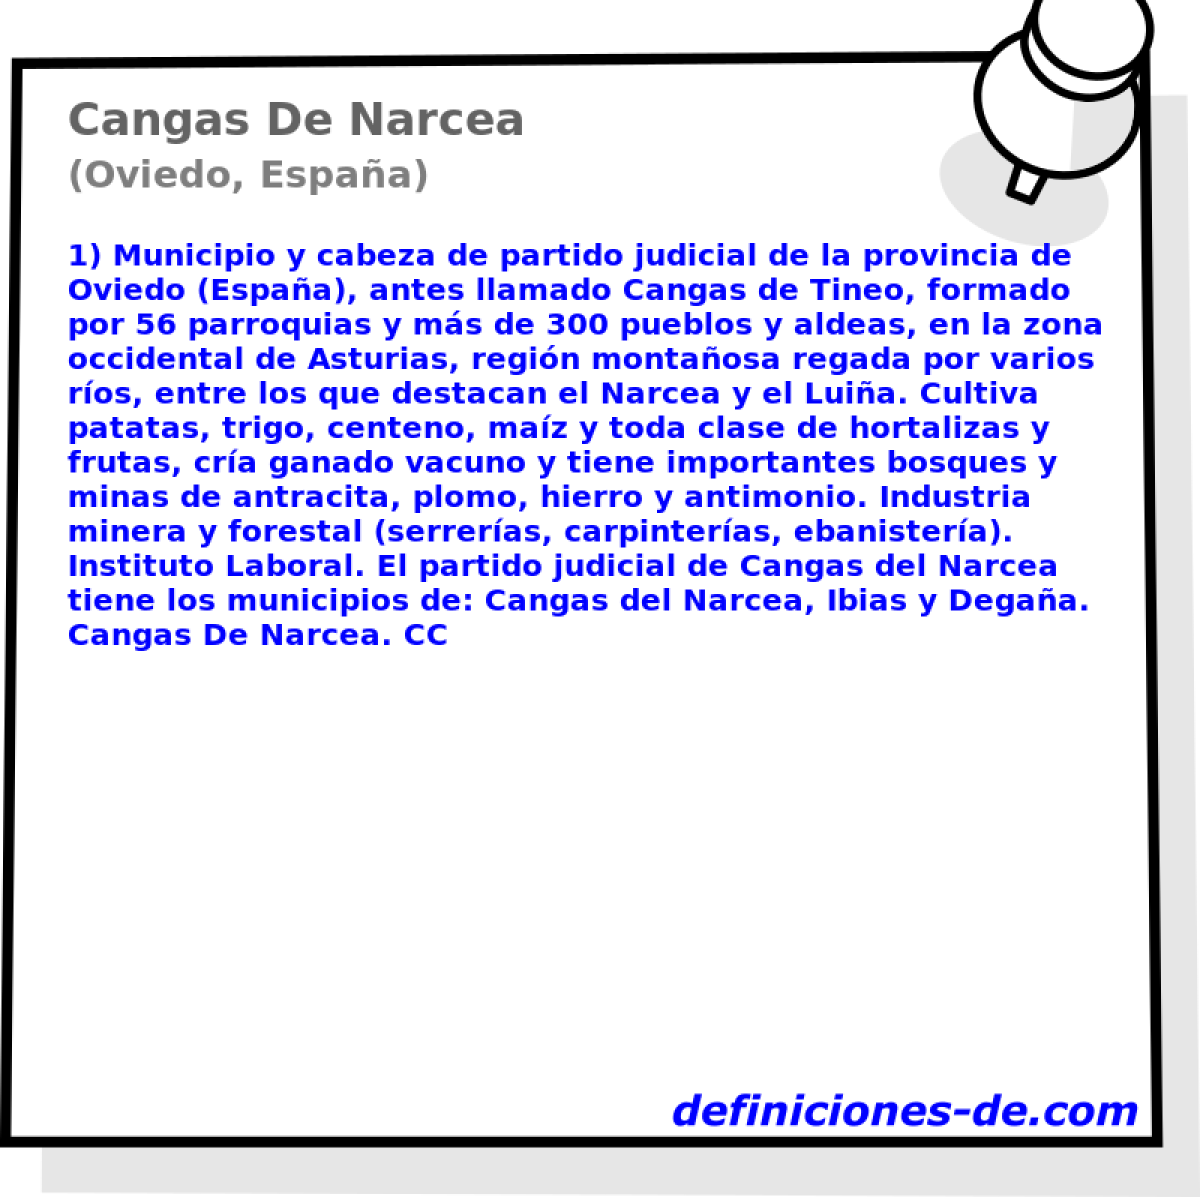 Cangas De Narcea (Oviedo, Espaa)